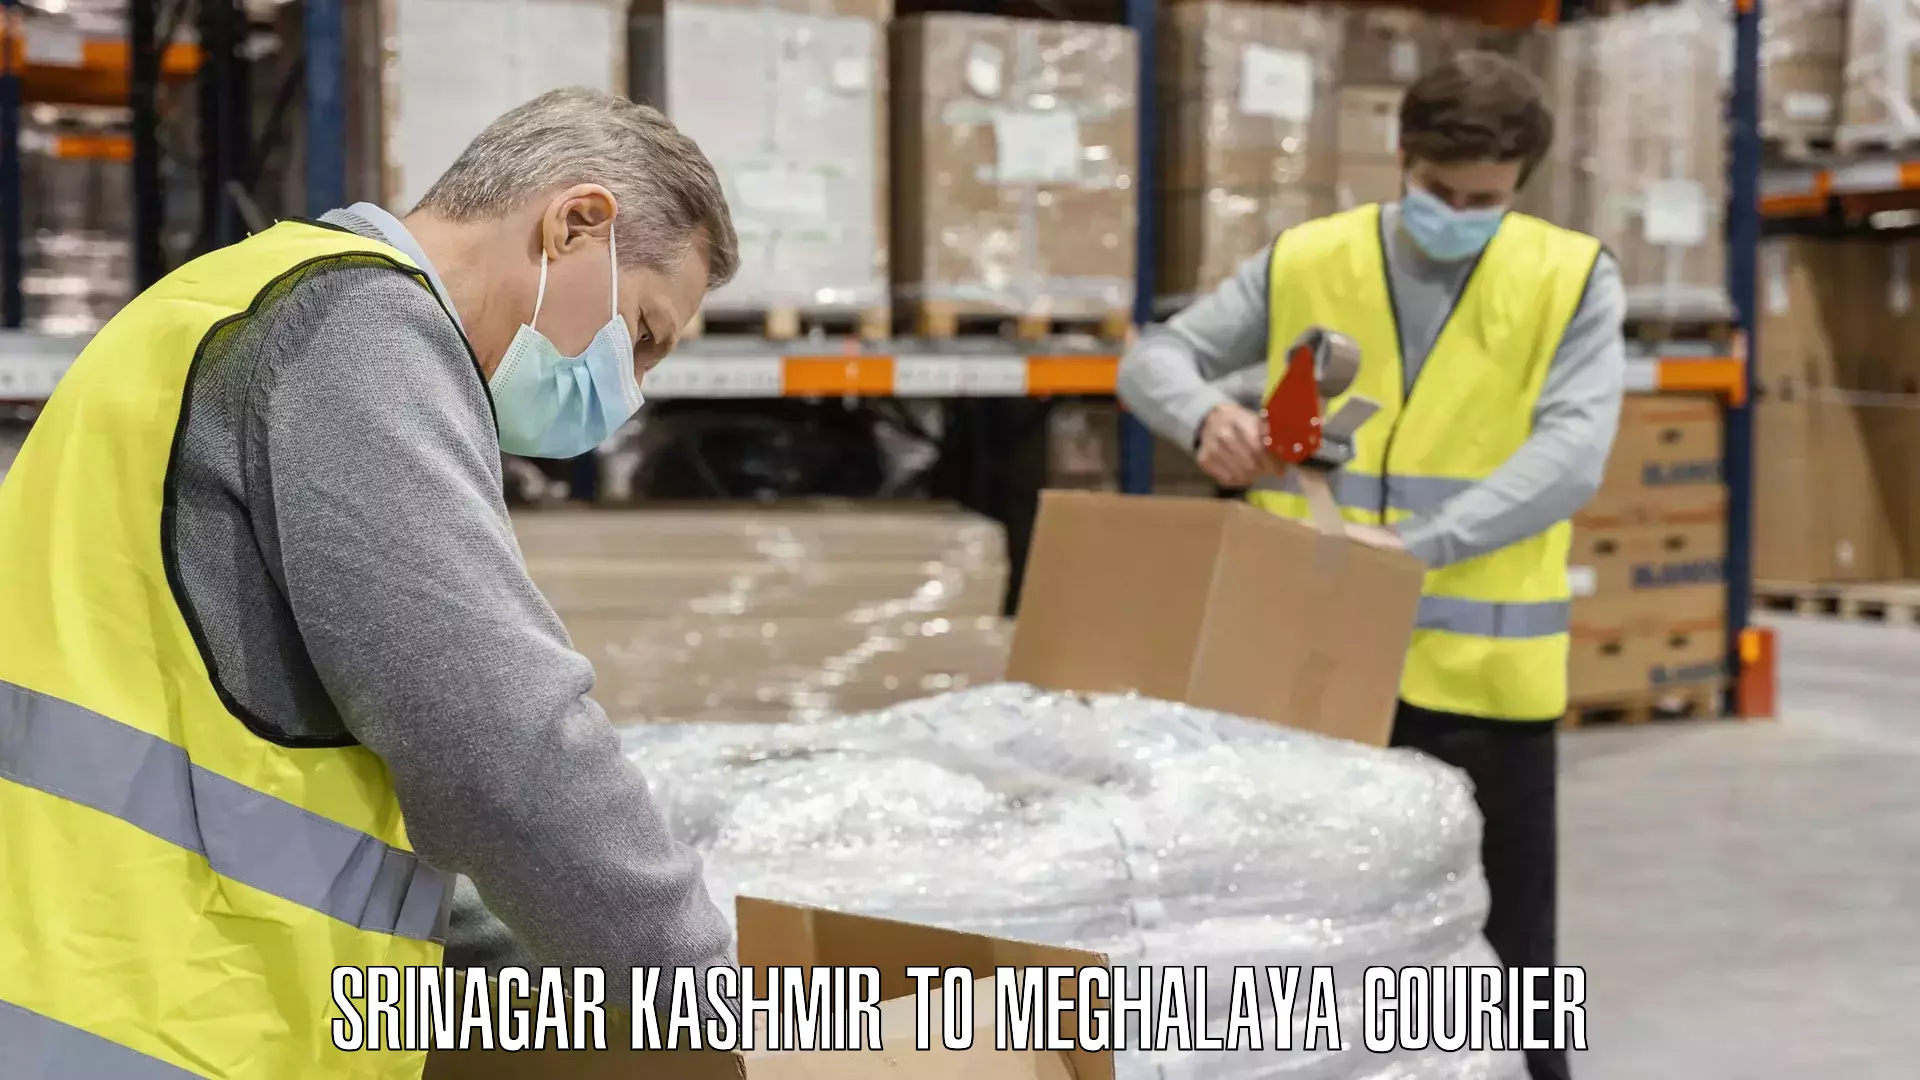 Baggage shipping experts Srinagar Kashmir to Meghalaya